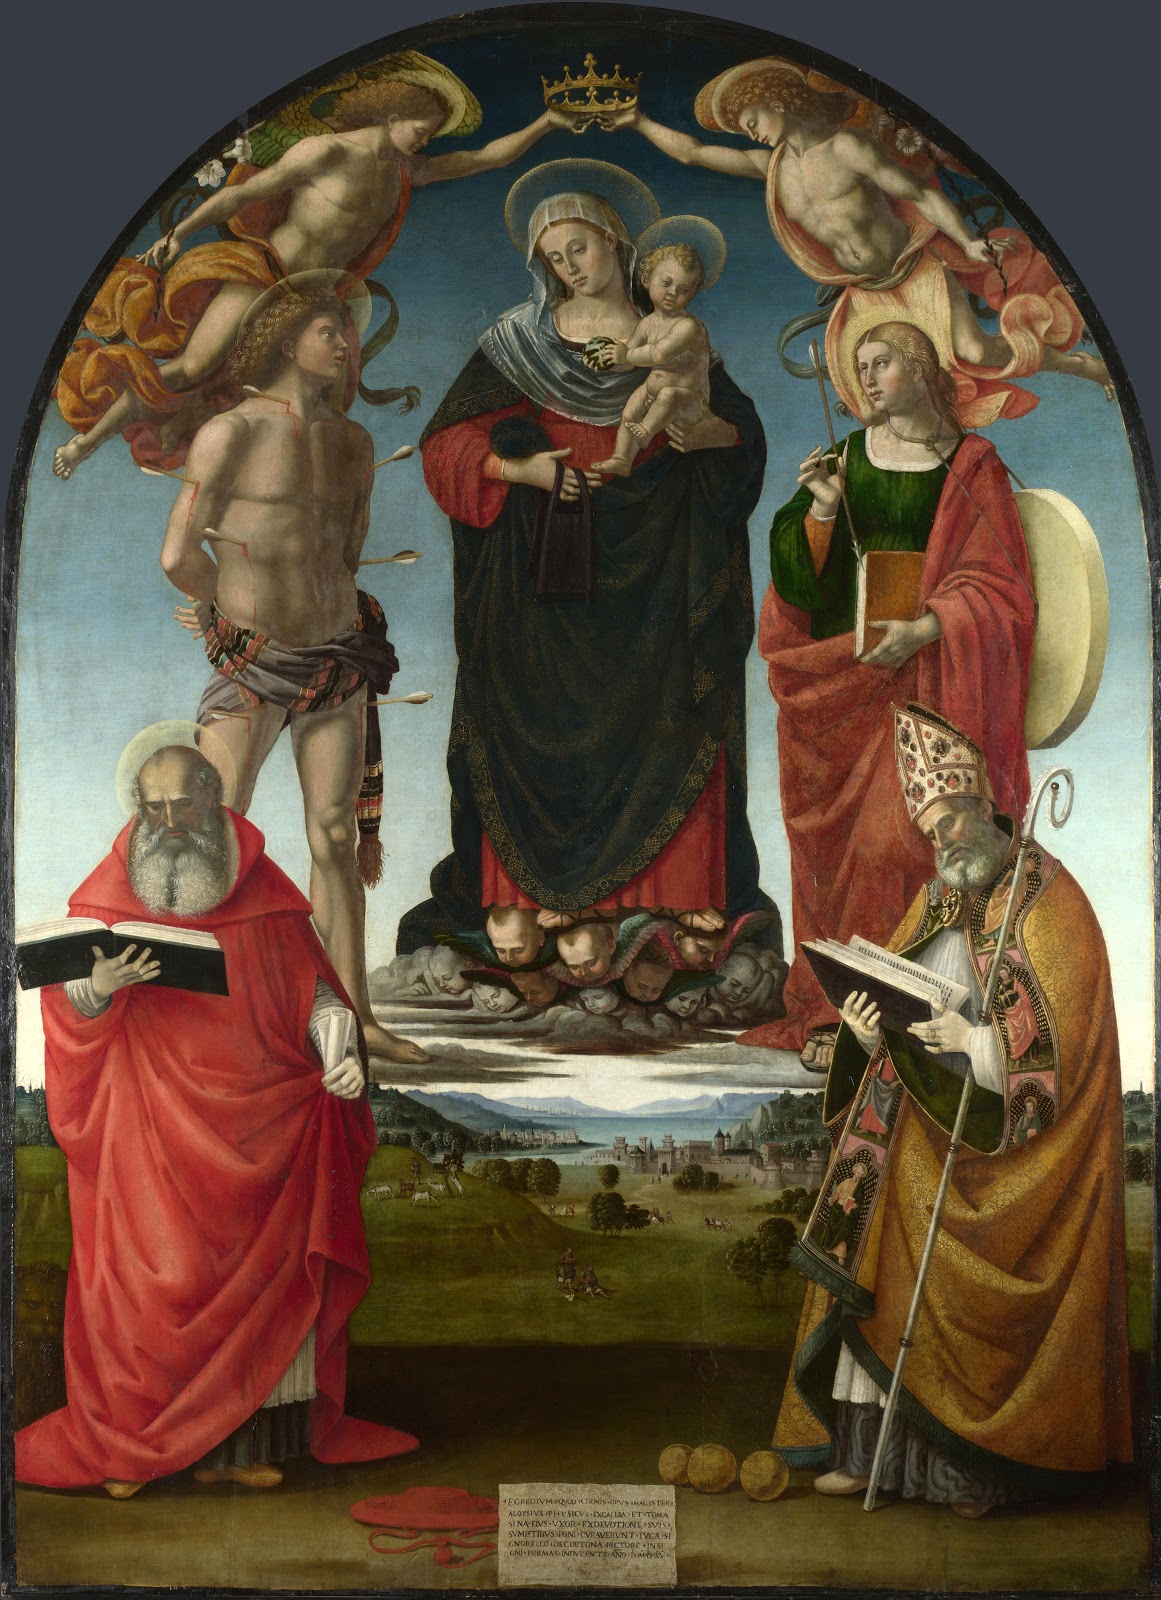 Luca+Signorelli-1445-1523 (43).jpg